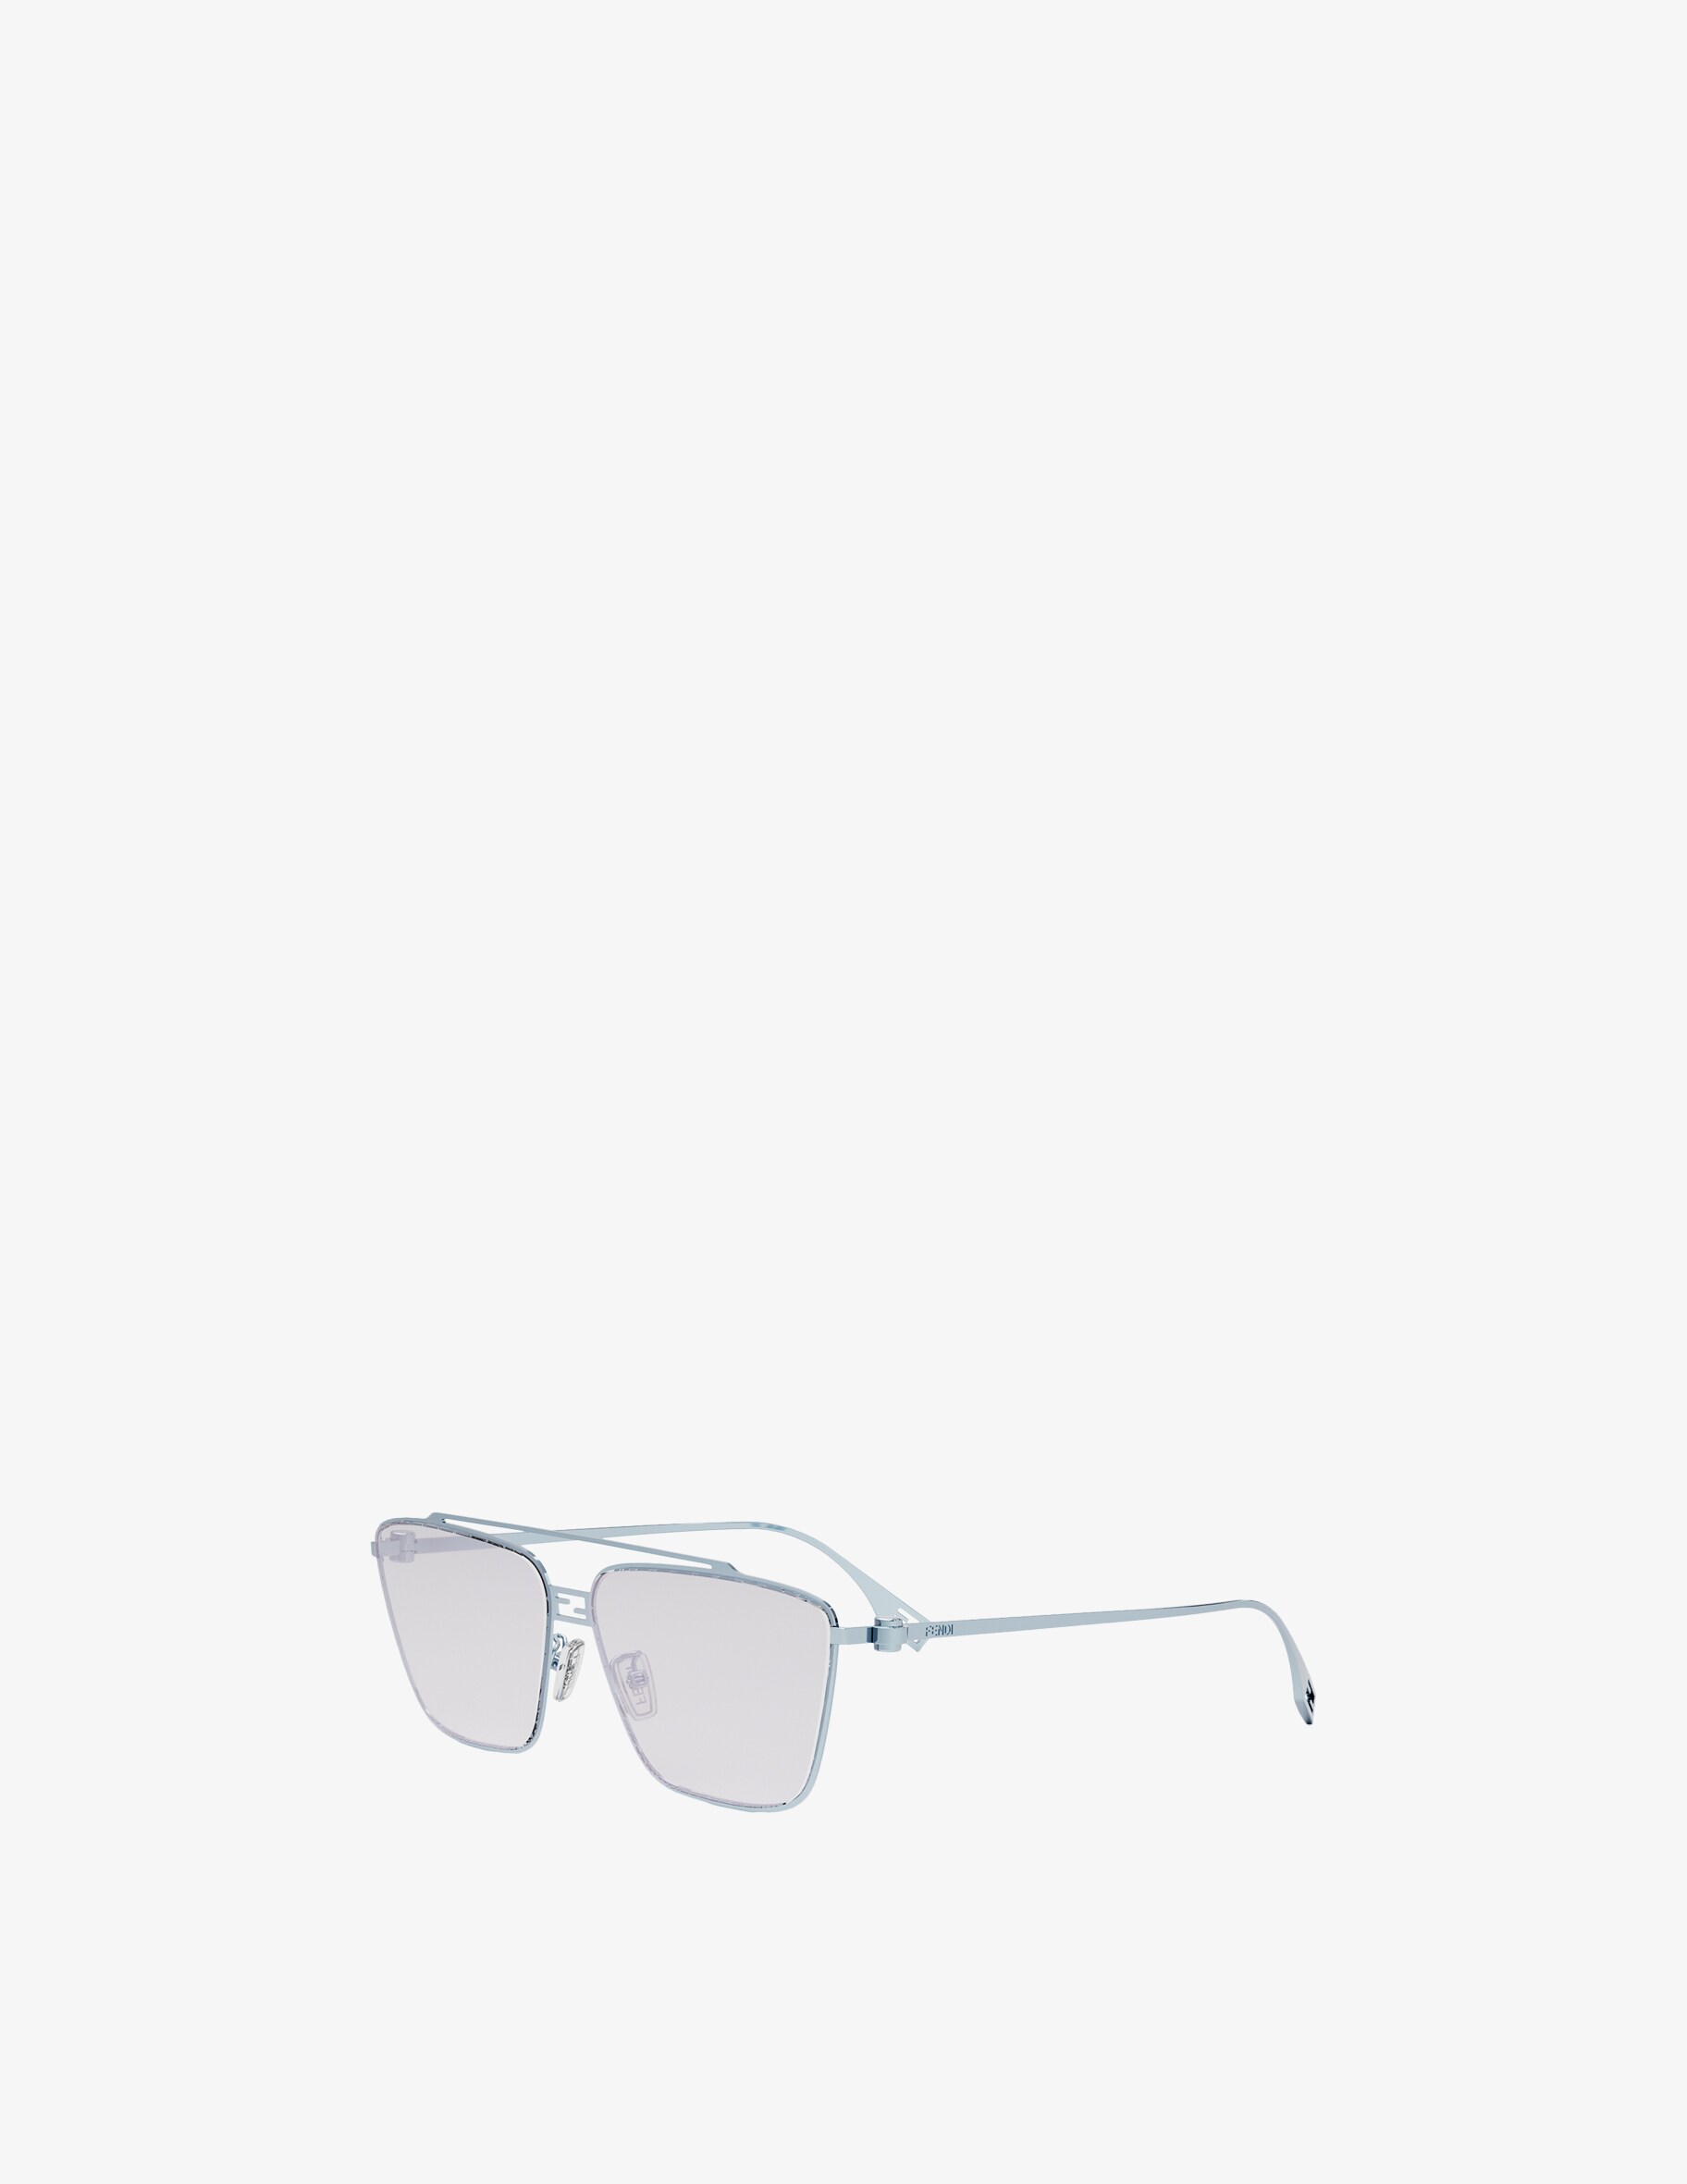 цена Солнцезащитные очки FE40110U в квадратной оправе Fendi, цвет Shiny Light Blue